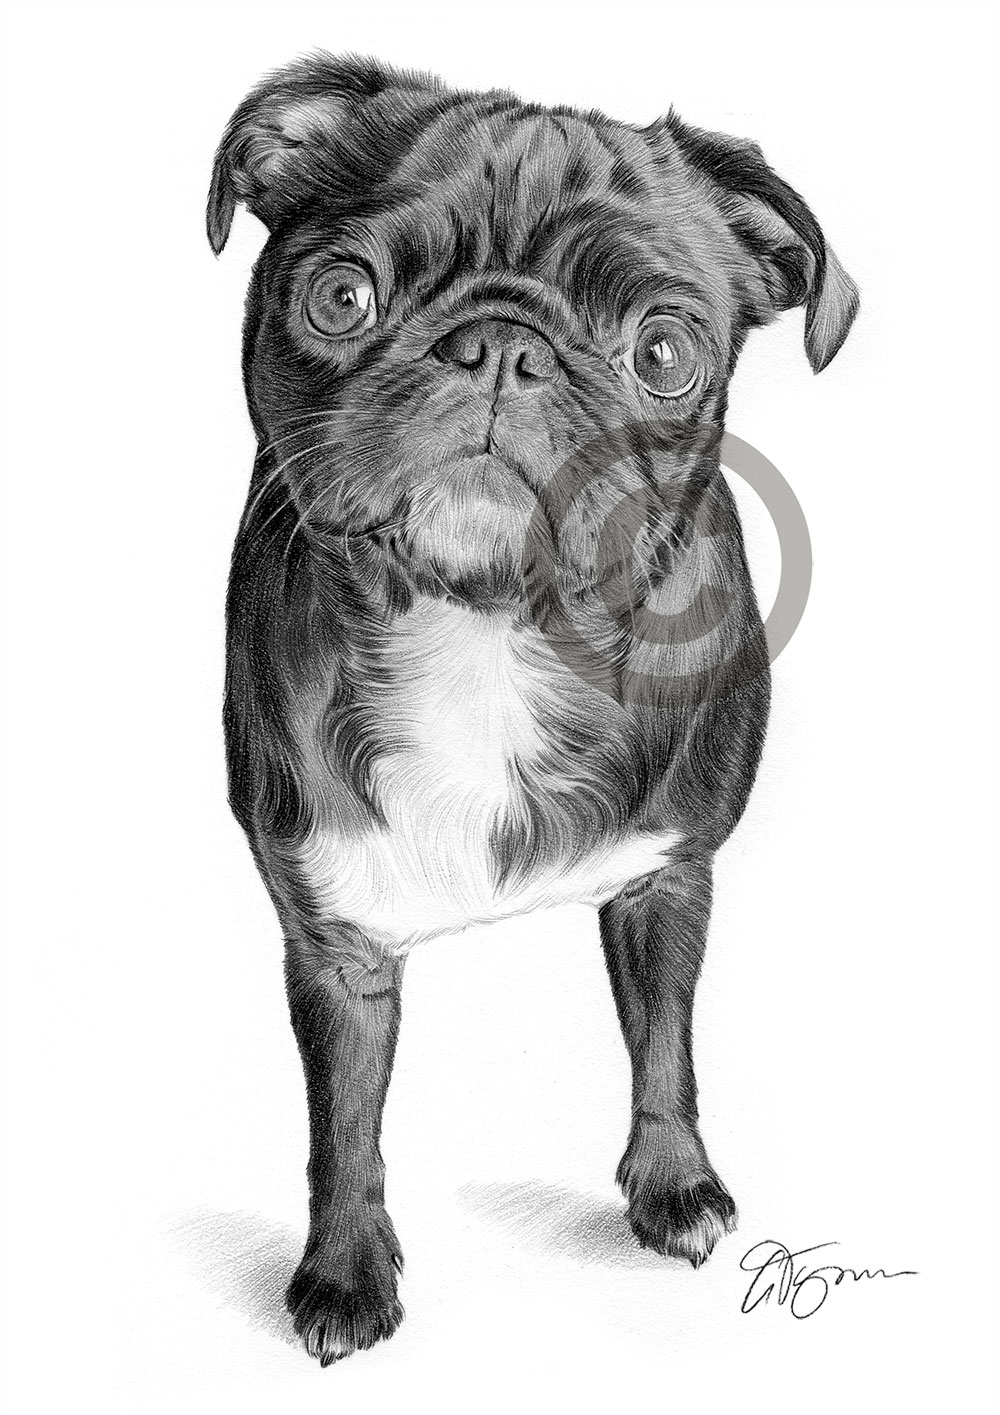 Pencil drawing of a black Pug by artist Gary Tymon